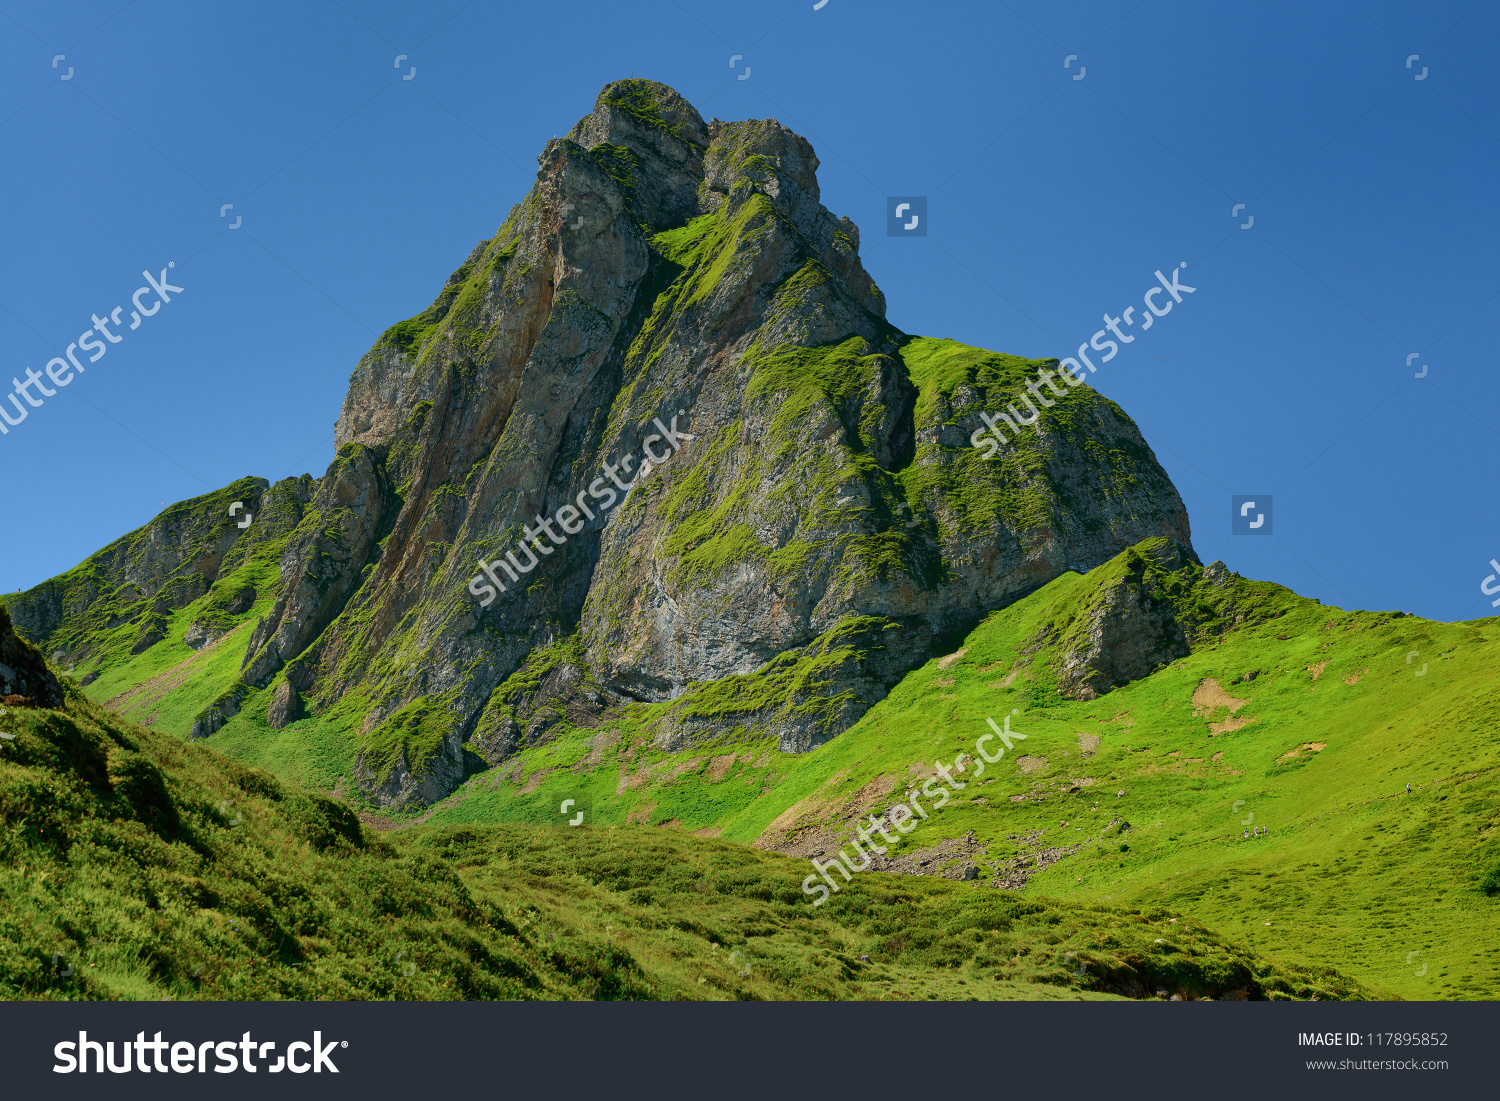 stock-photo-flumserberg-green-mountain-alps-switzerland-blue-sky-117895852.jpg